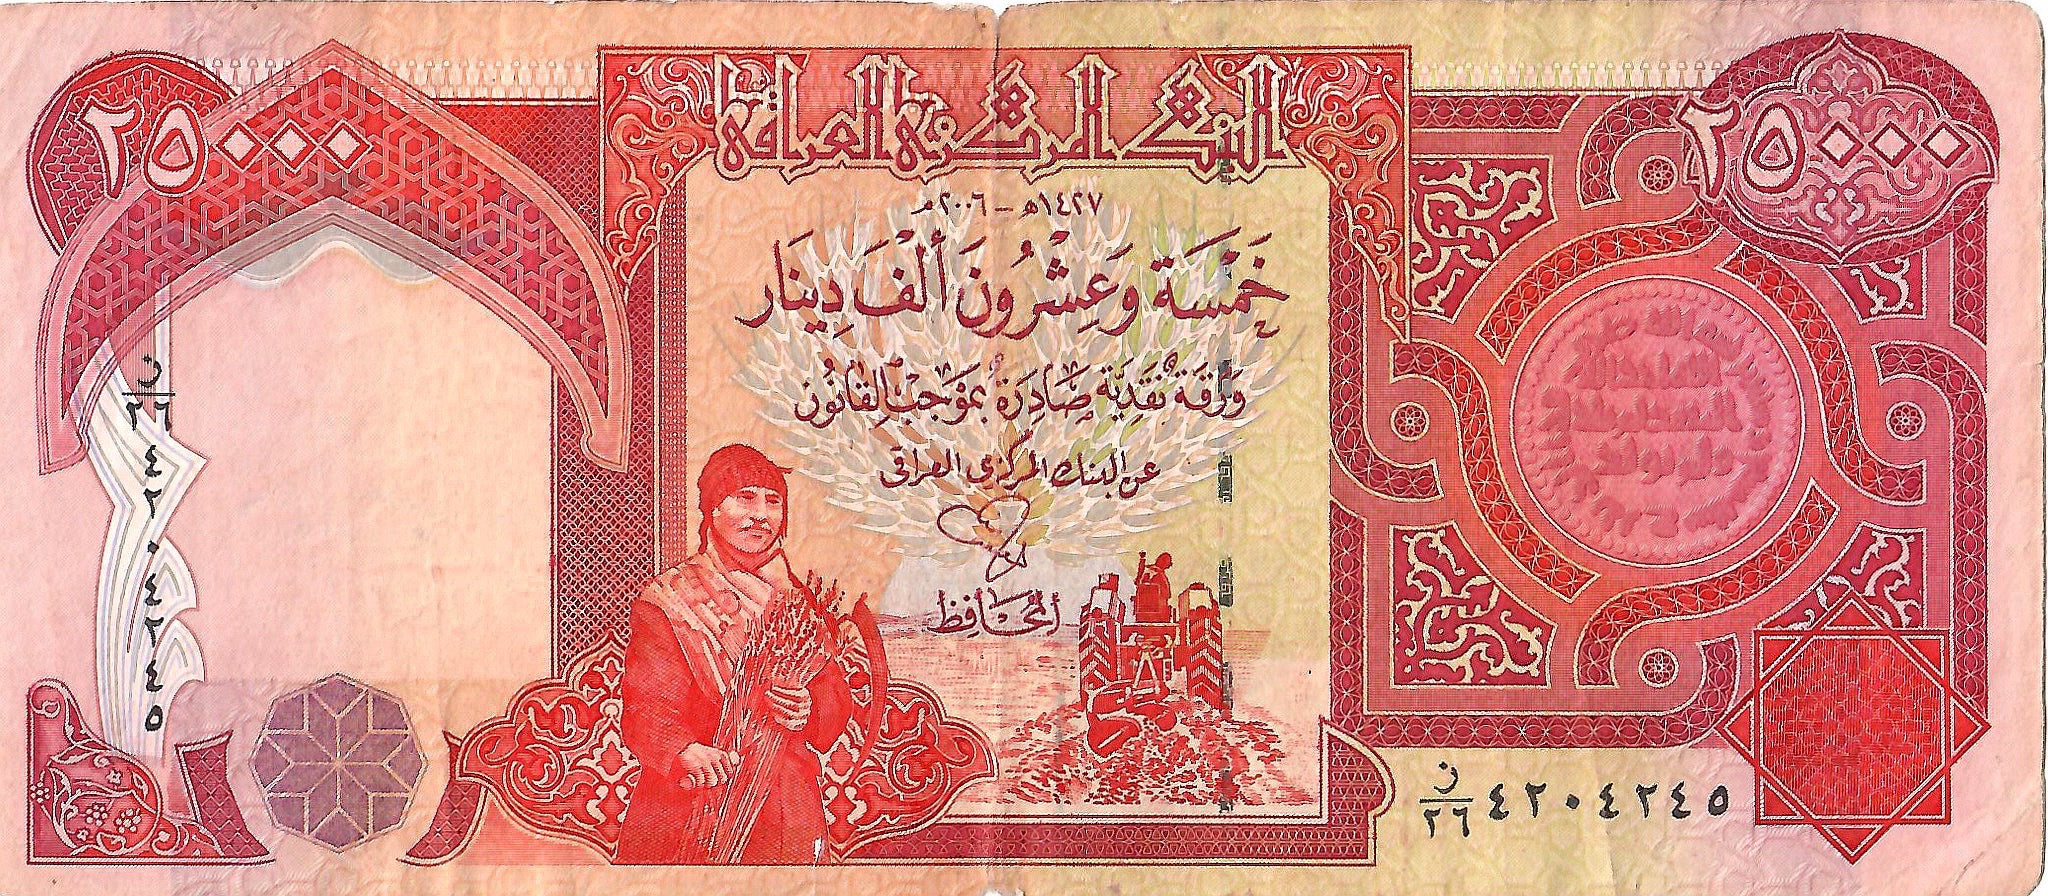 Iraq 25,000 Dinars Banknote, 2006, P-96c, CIR